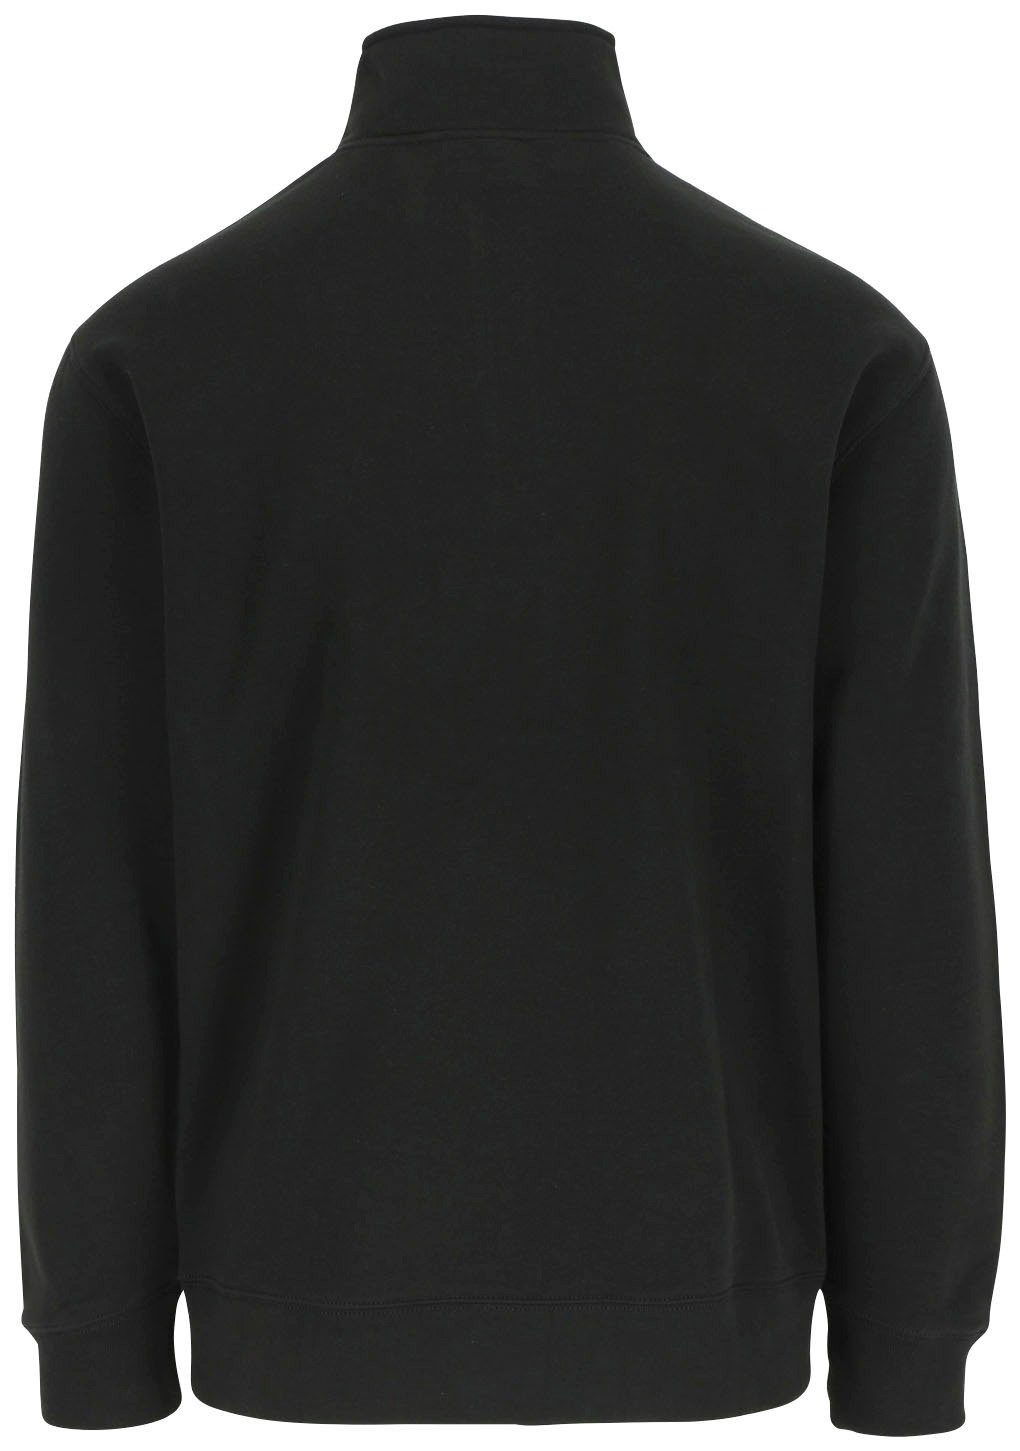 Herock Sweater Vigor Basic, mit Reißverschluss angenehmes Tragegefühl am Kragen, schwarz